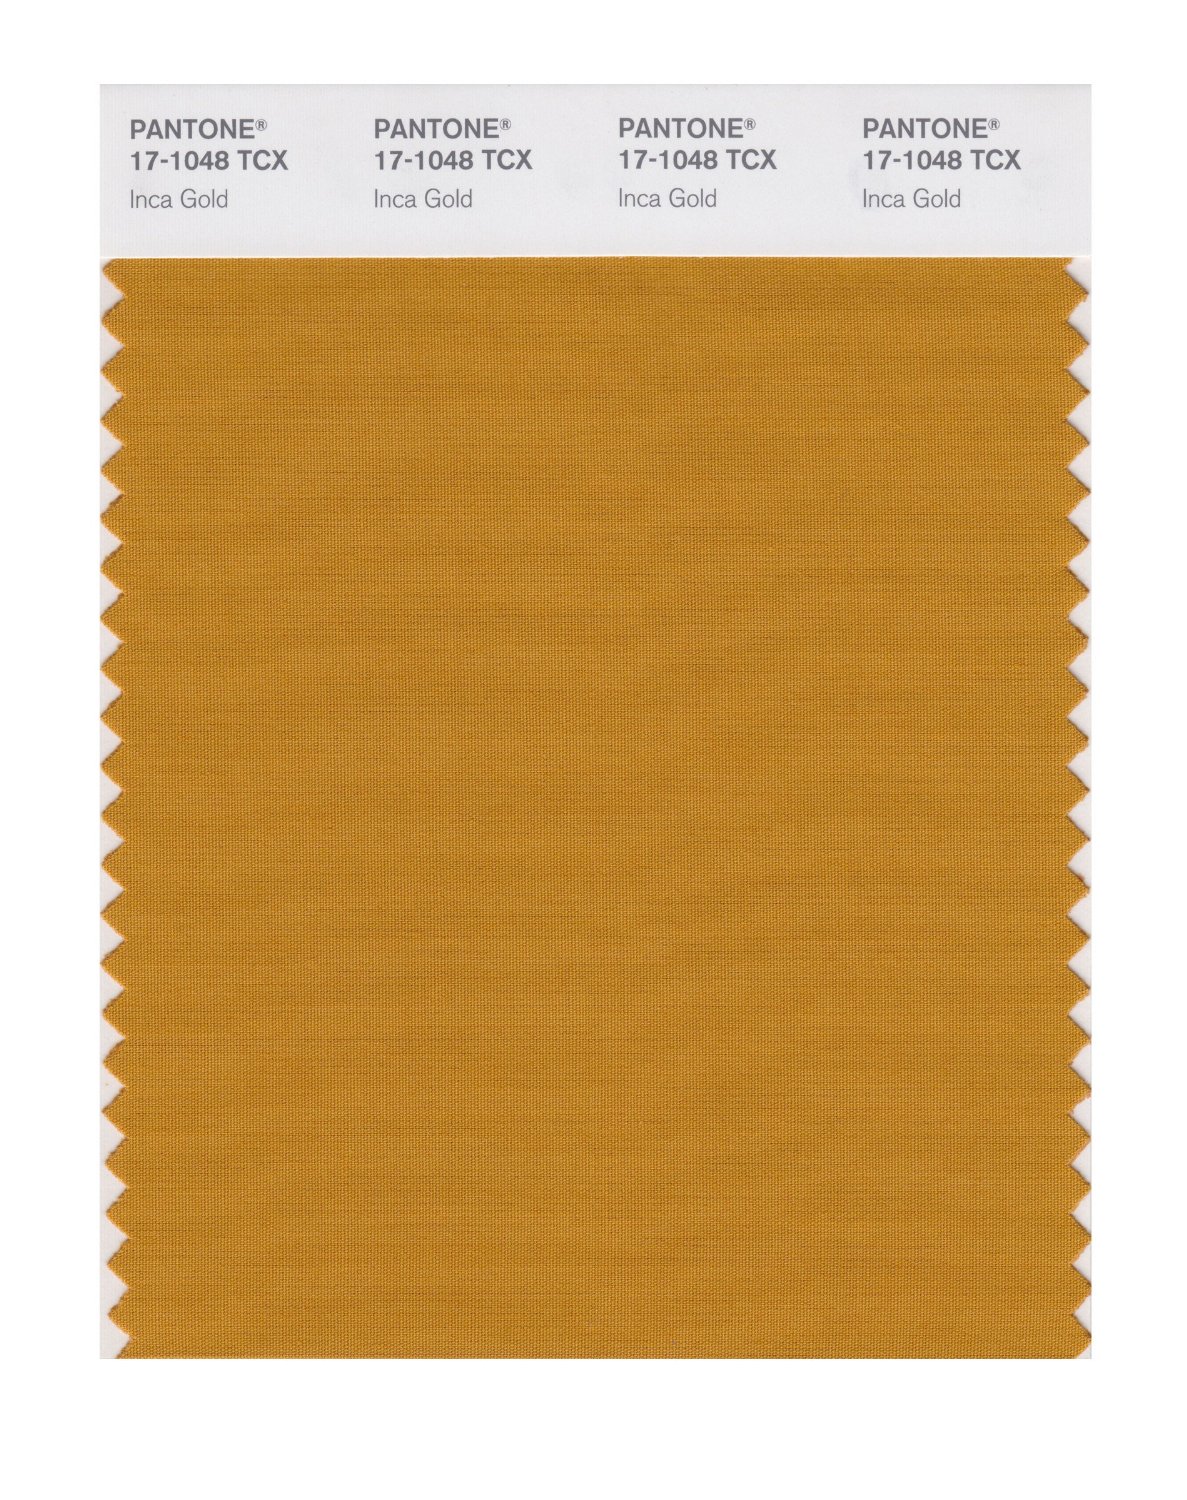 Pantone Cotton Swatch 17-1048 Inca Gold